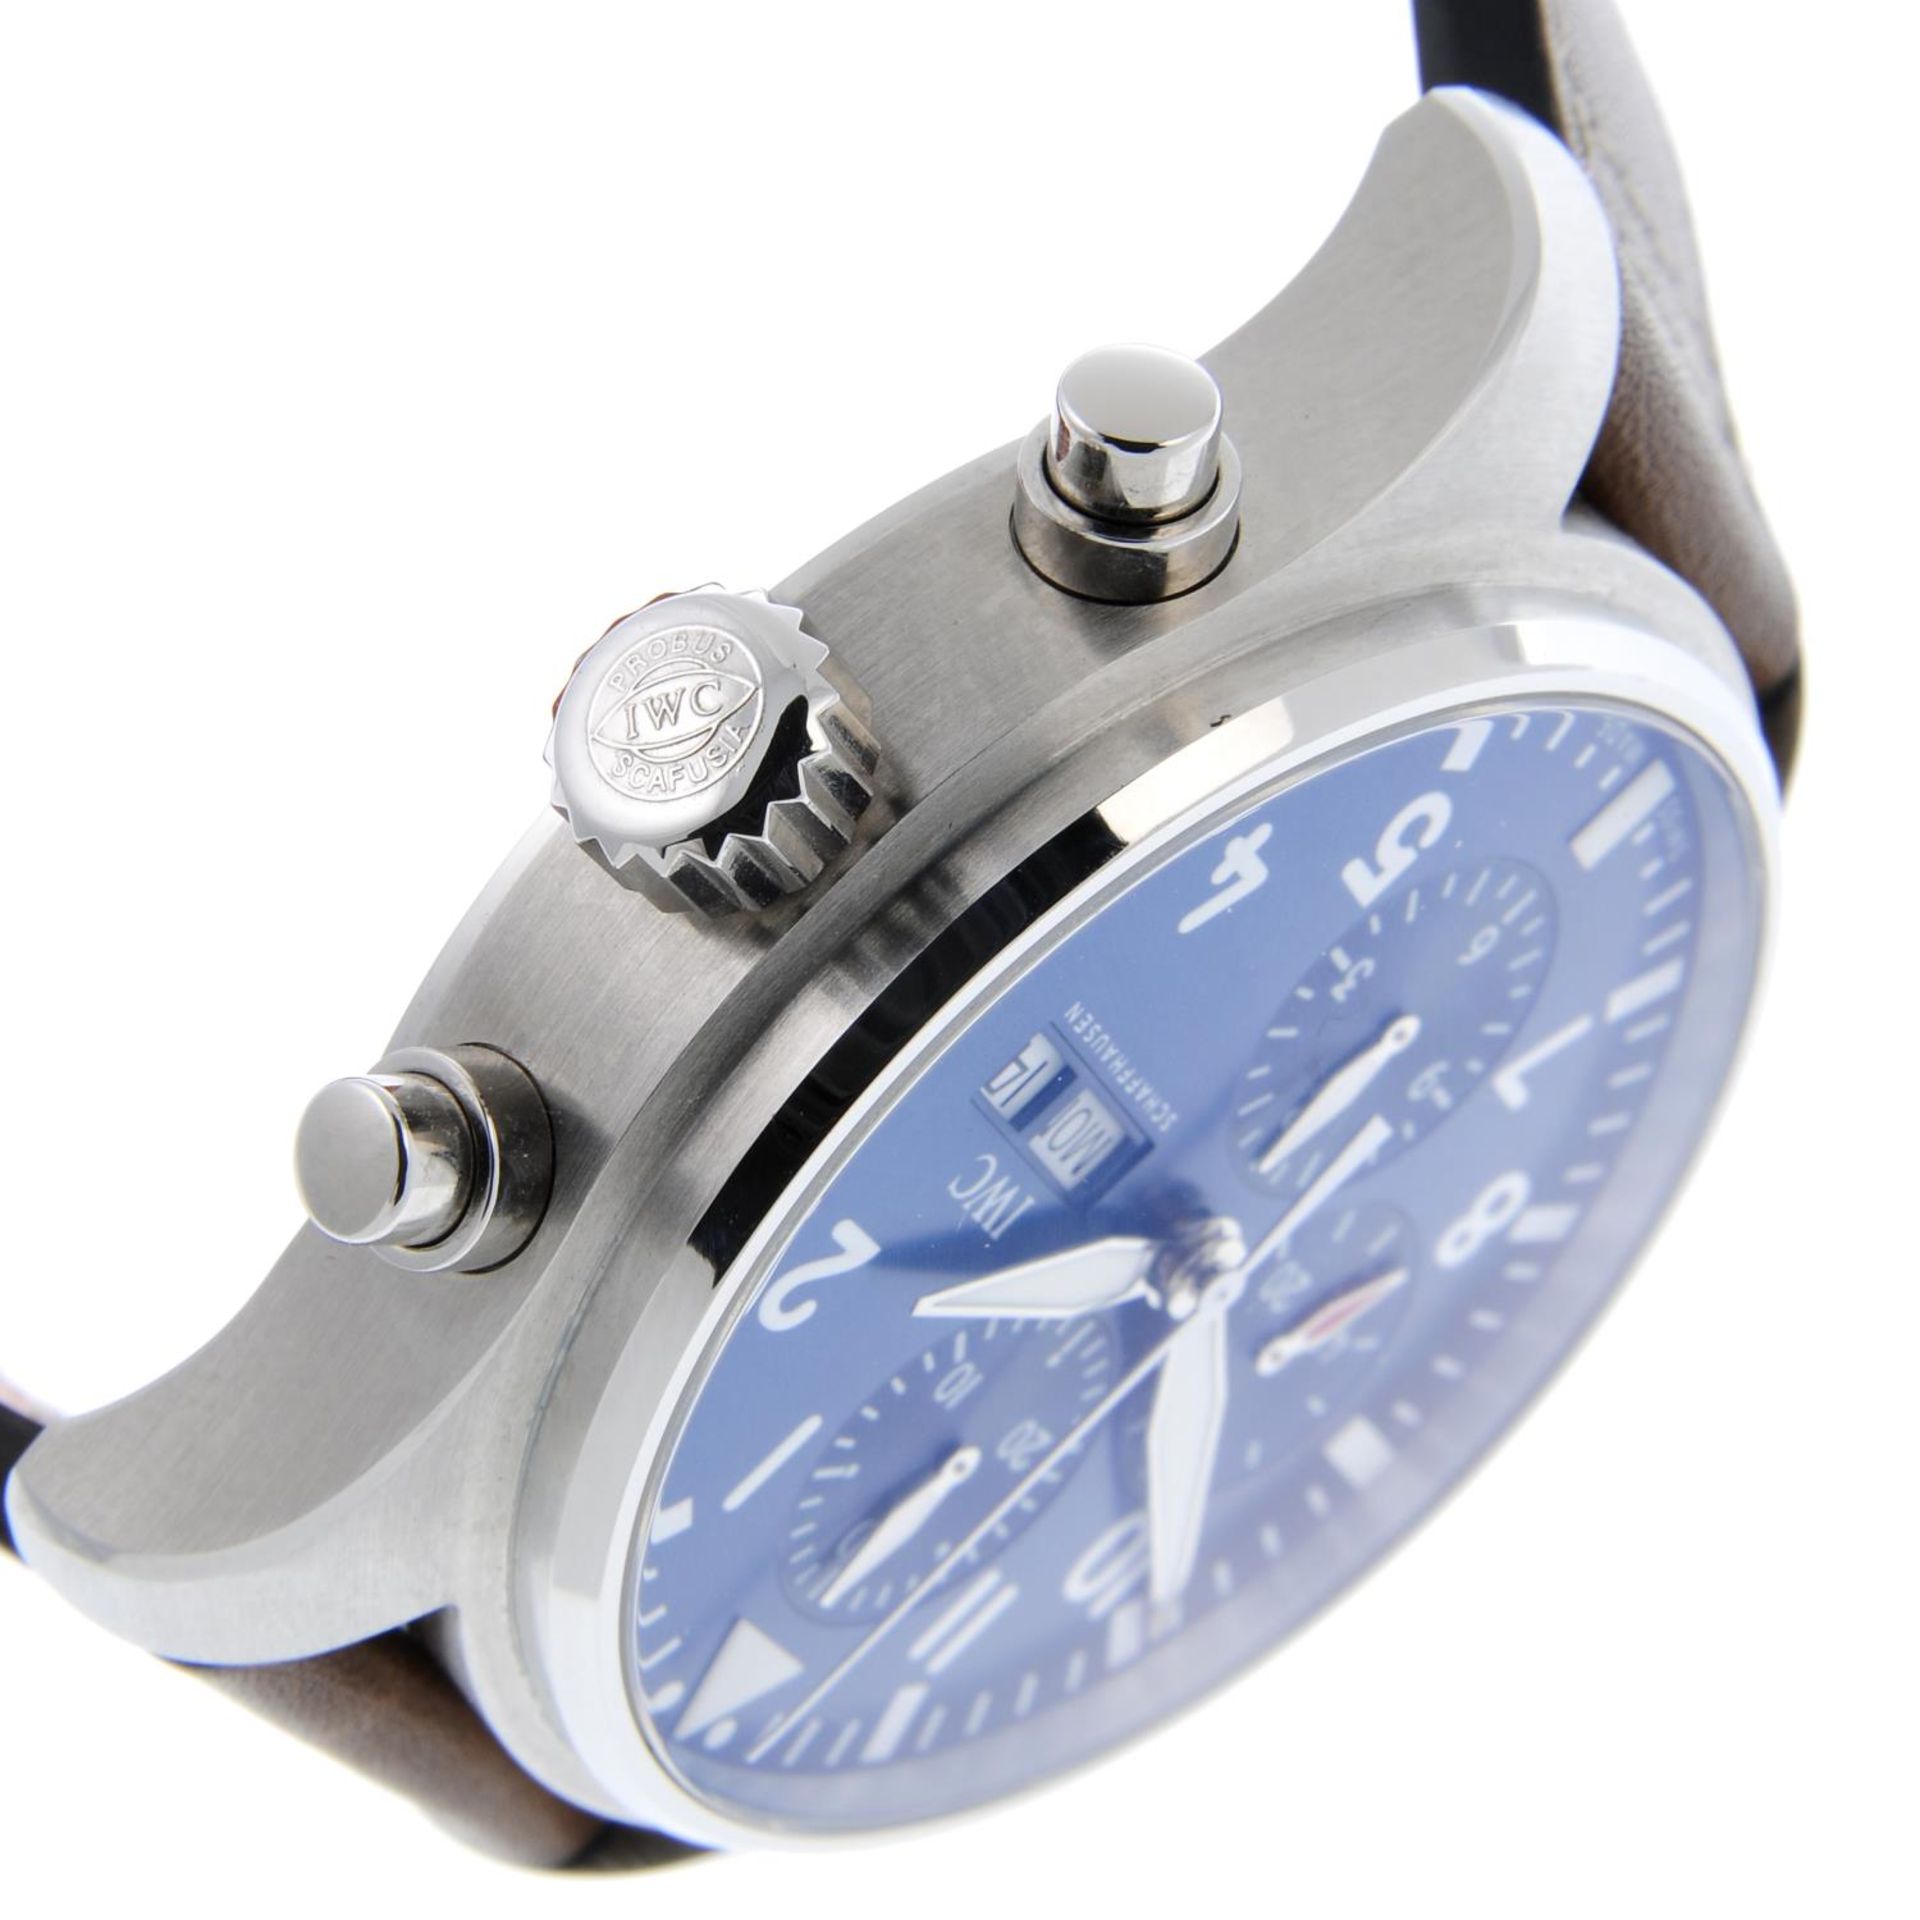 IWC - a gentleman's Pilot Edition Le Petit Prince chronograph wrist watch. - Image 5 of 5